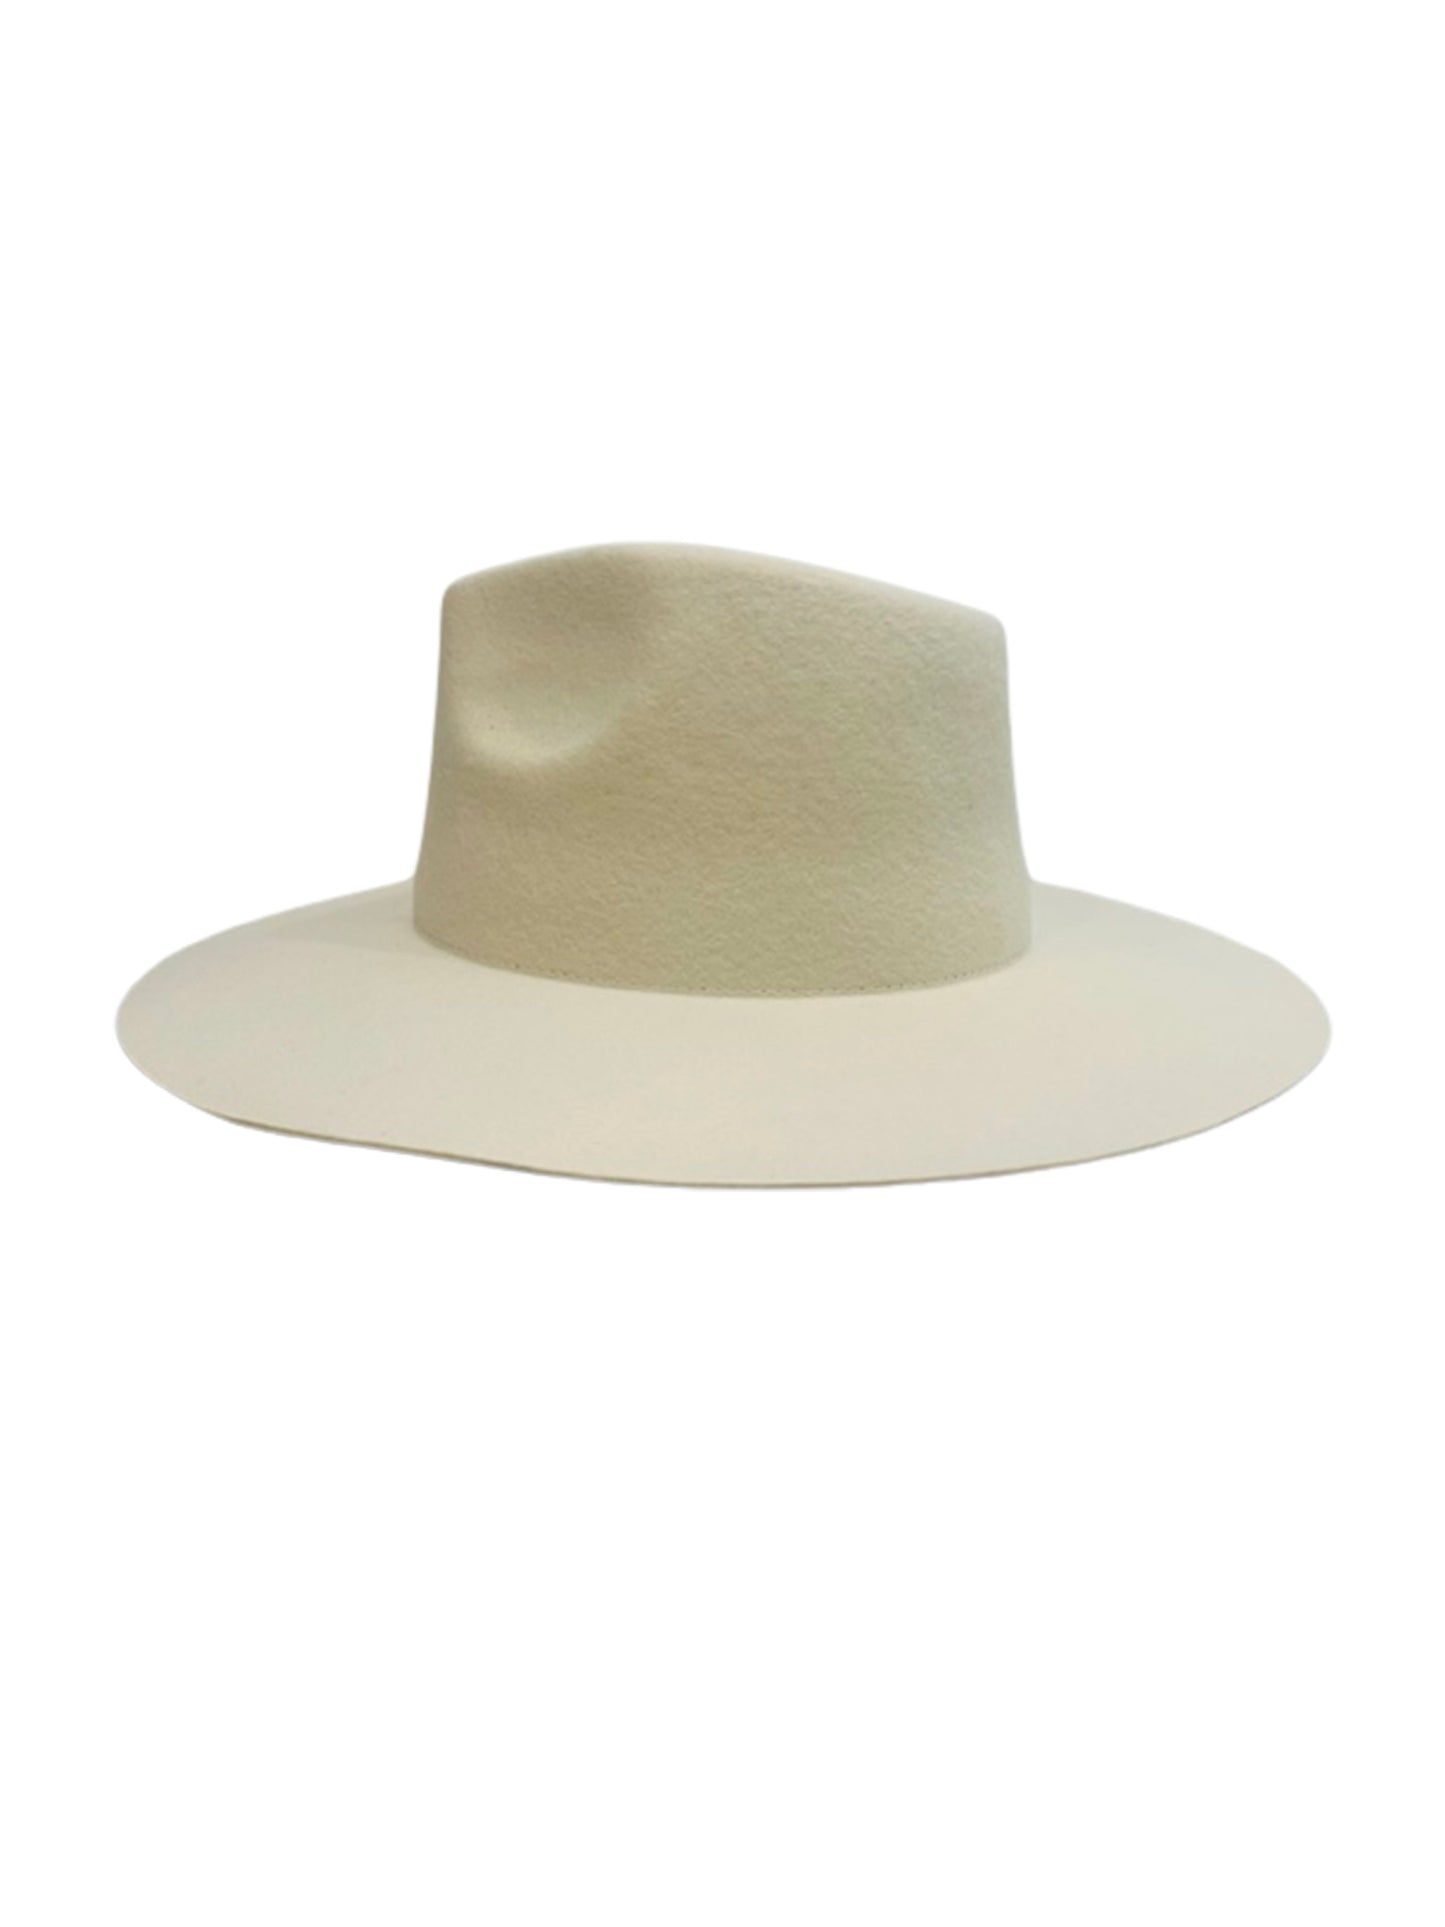 rancher hat ivory side